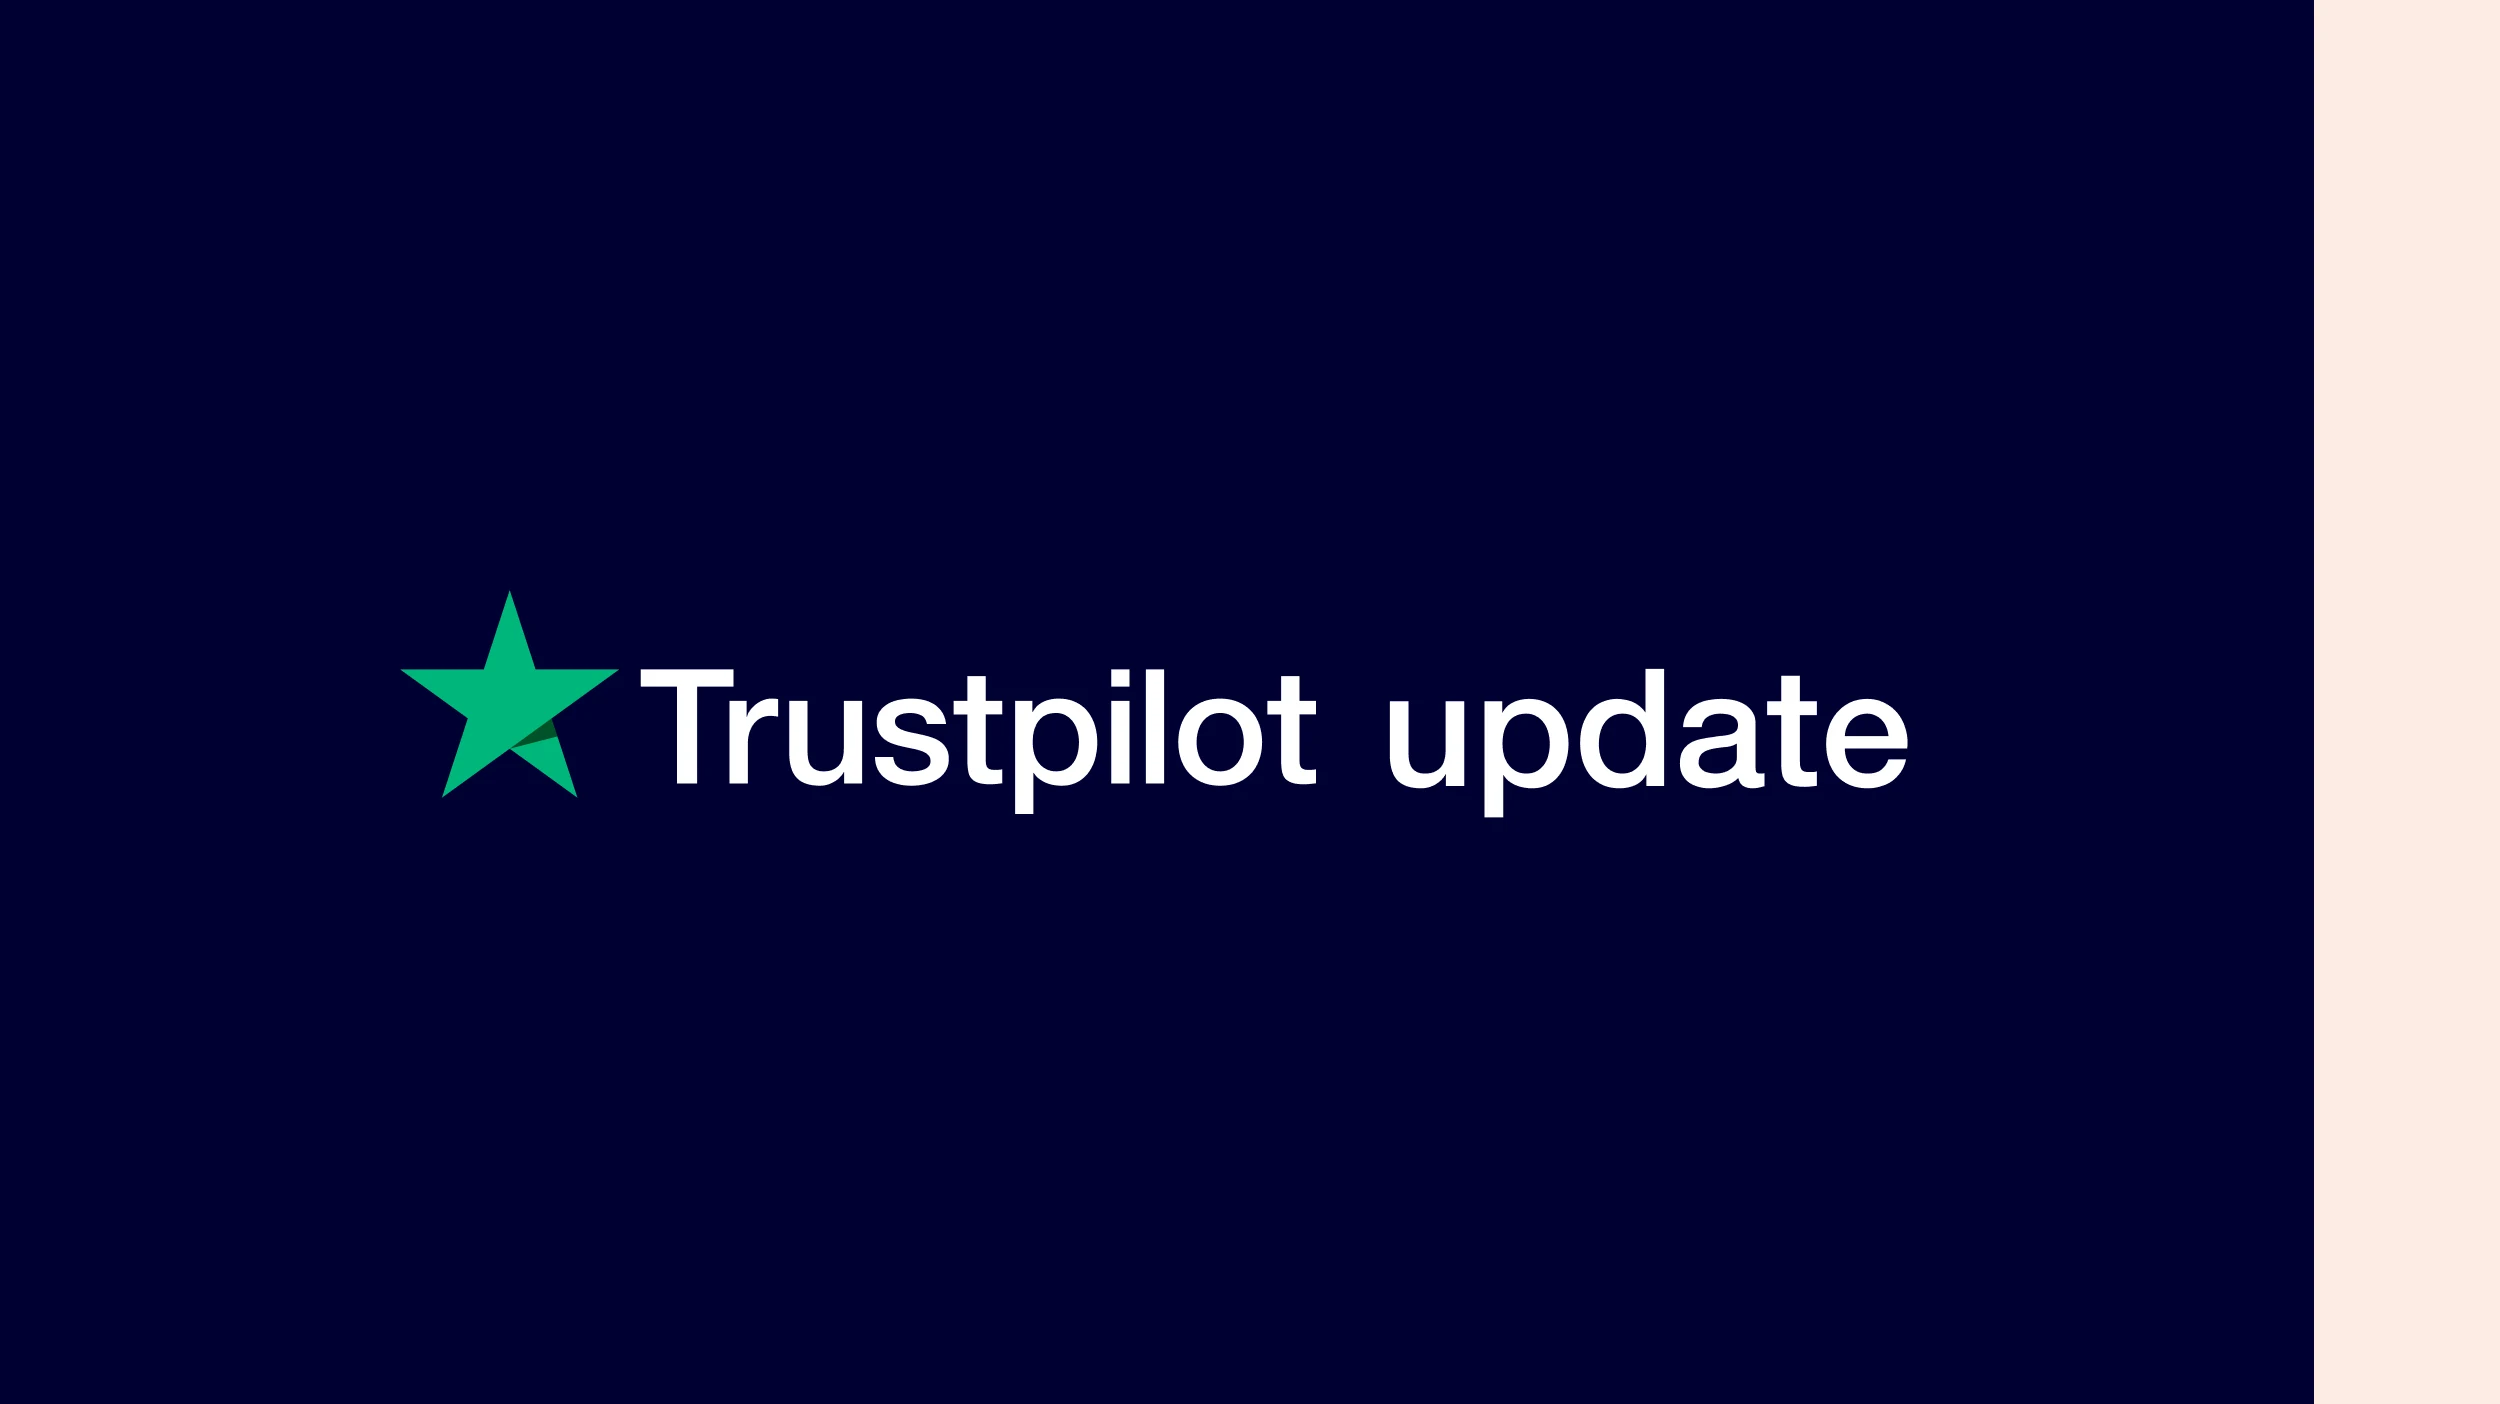 Trustpilot update: Meet the new Trustpilot business app 